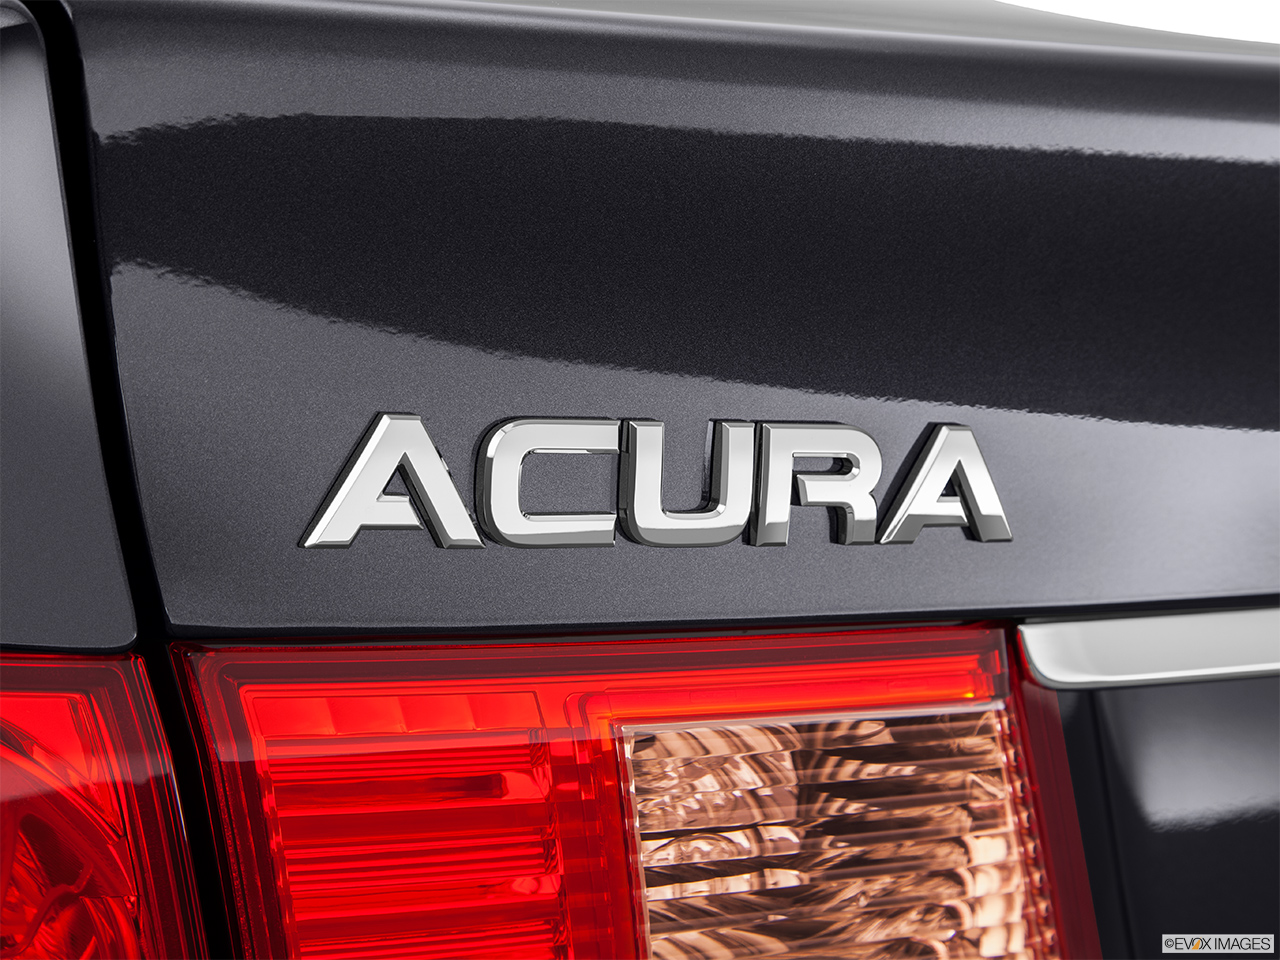 2014 Acura TSX 5-Speed Automatic Exterior Bonus Shots (no set spec) 